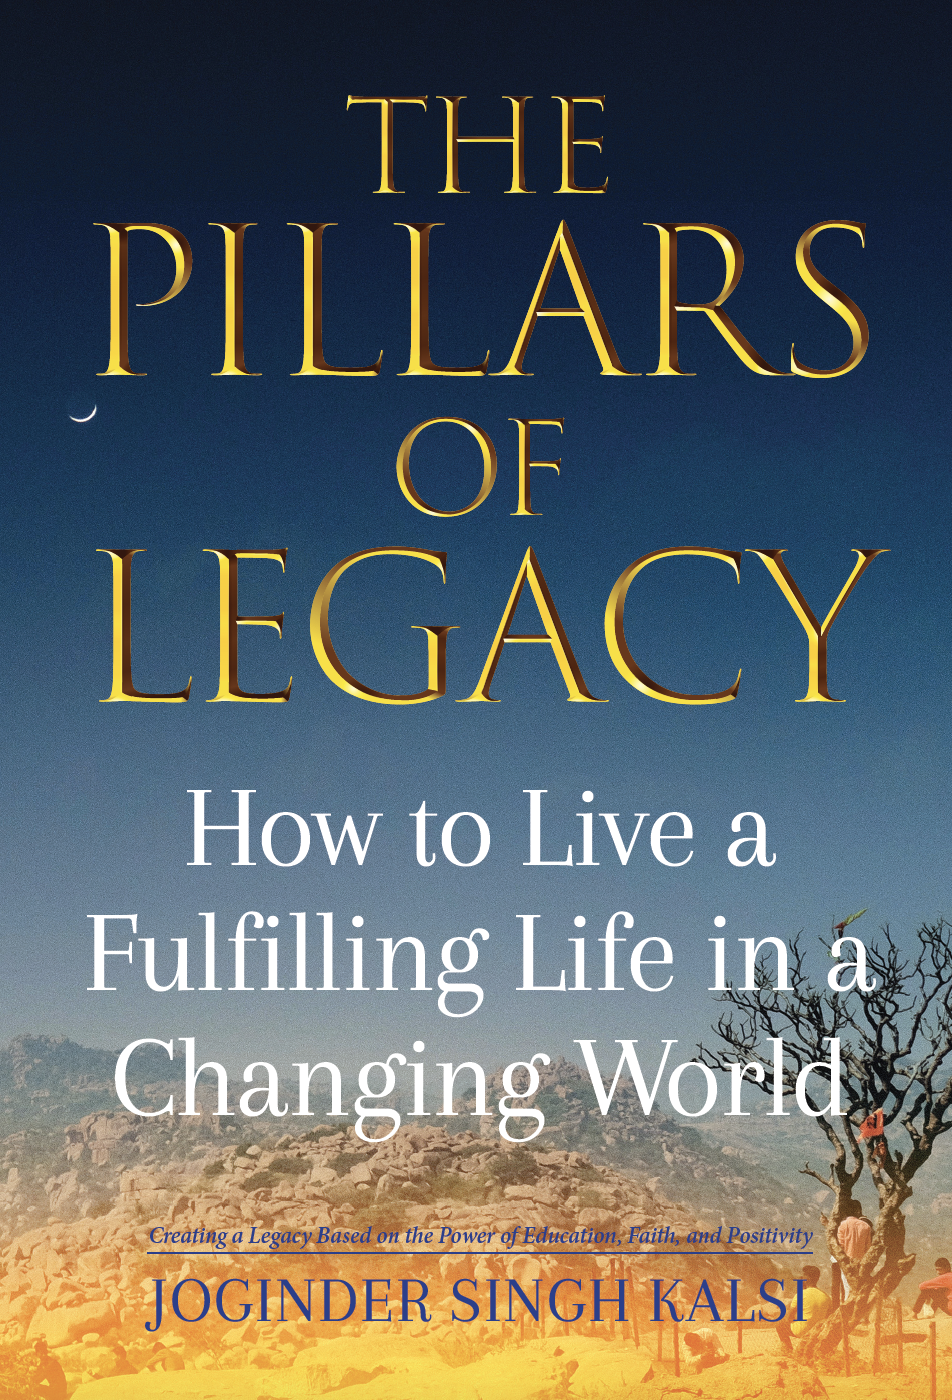 The Pillars of Legacy by Joginder Singh Kalsi